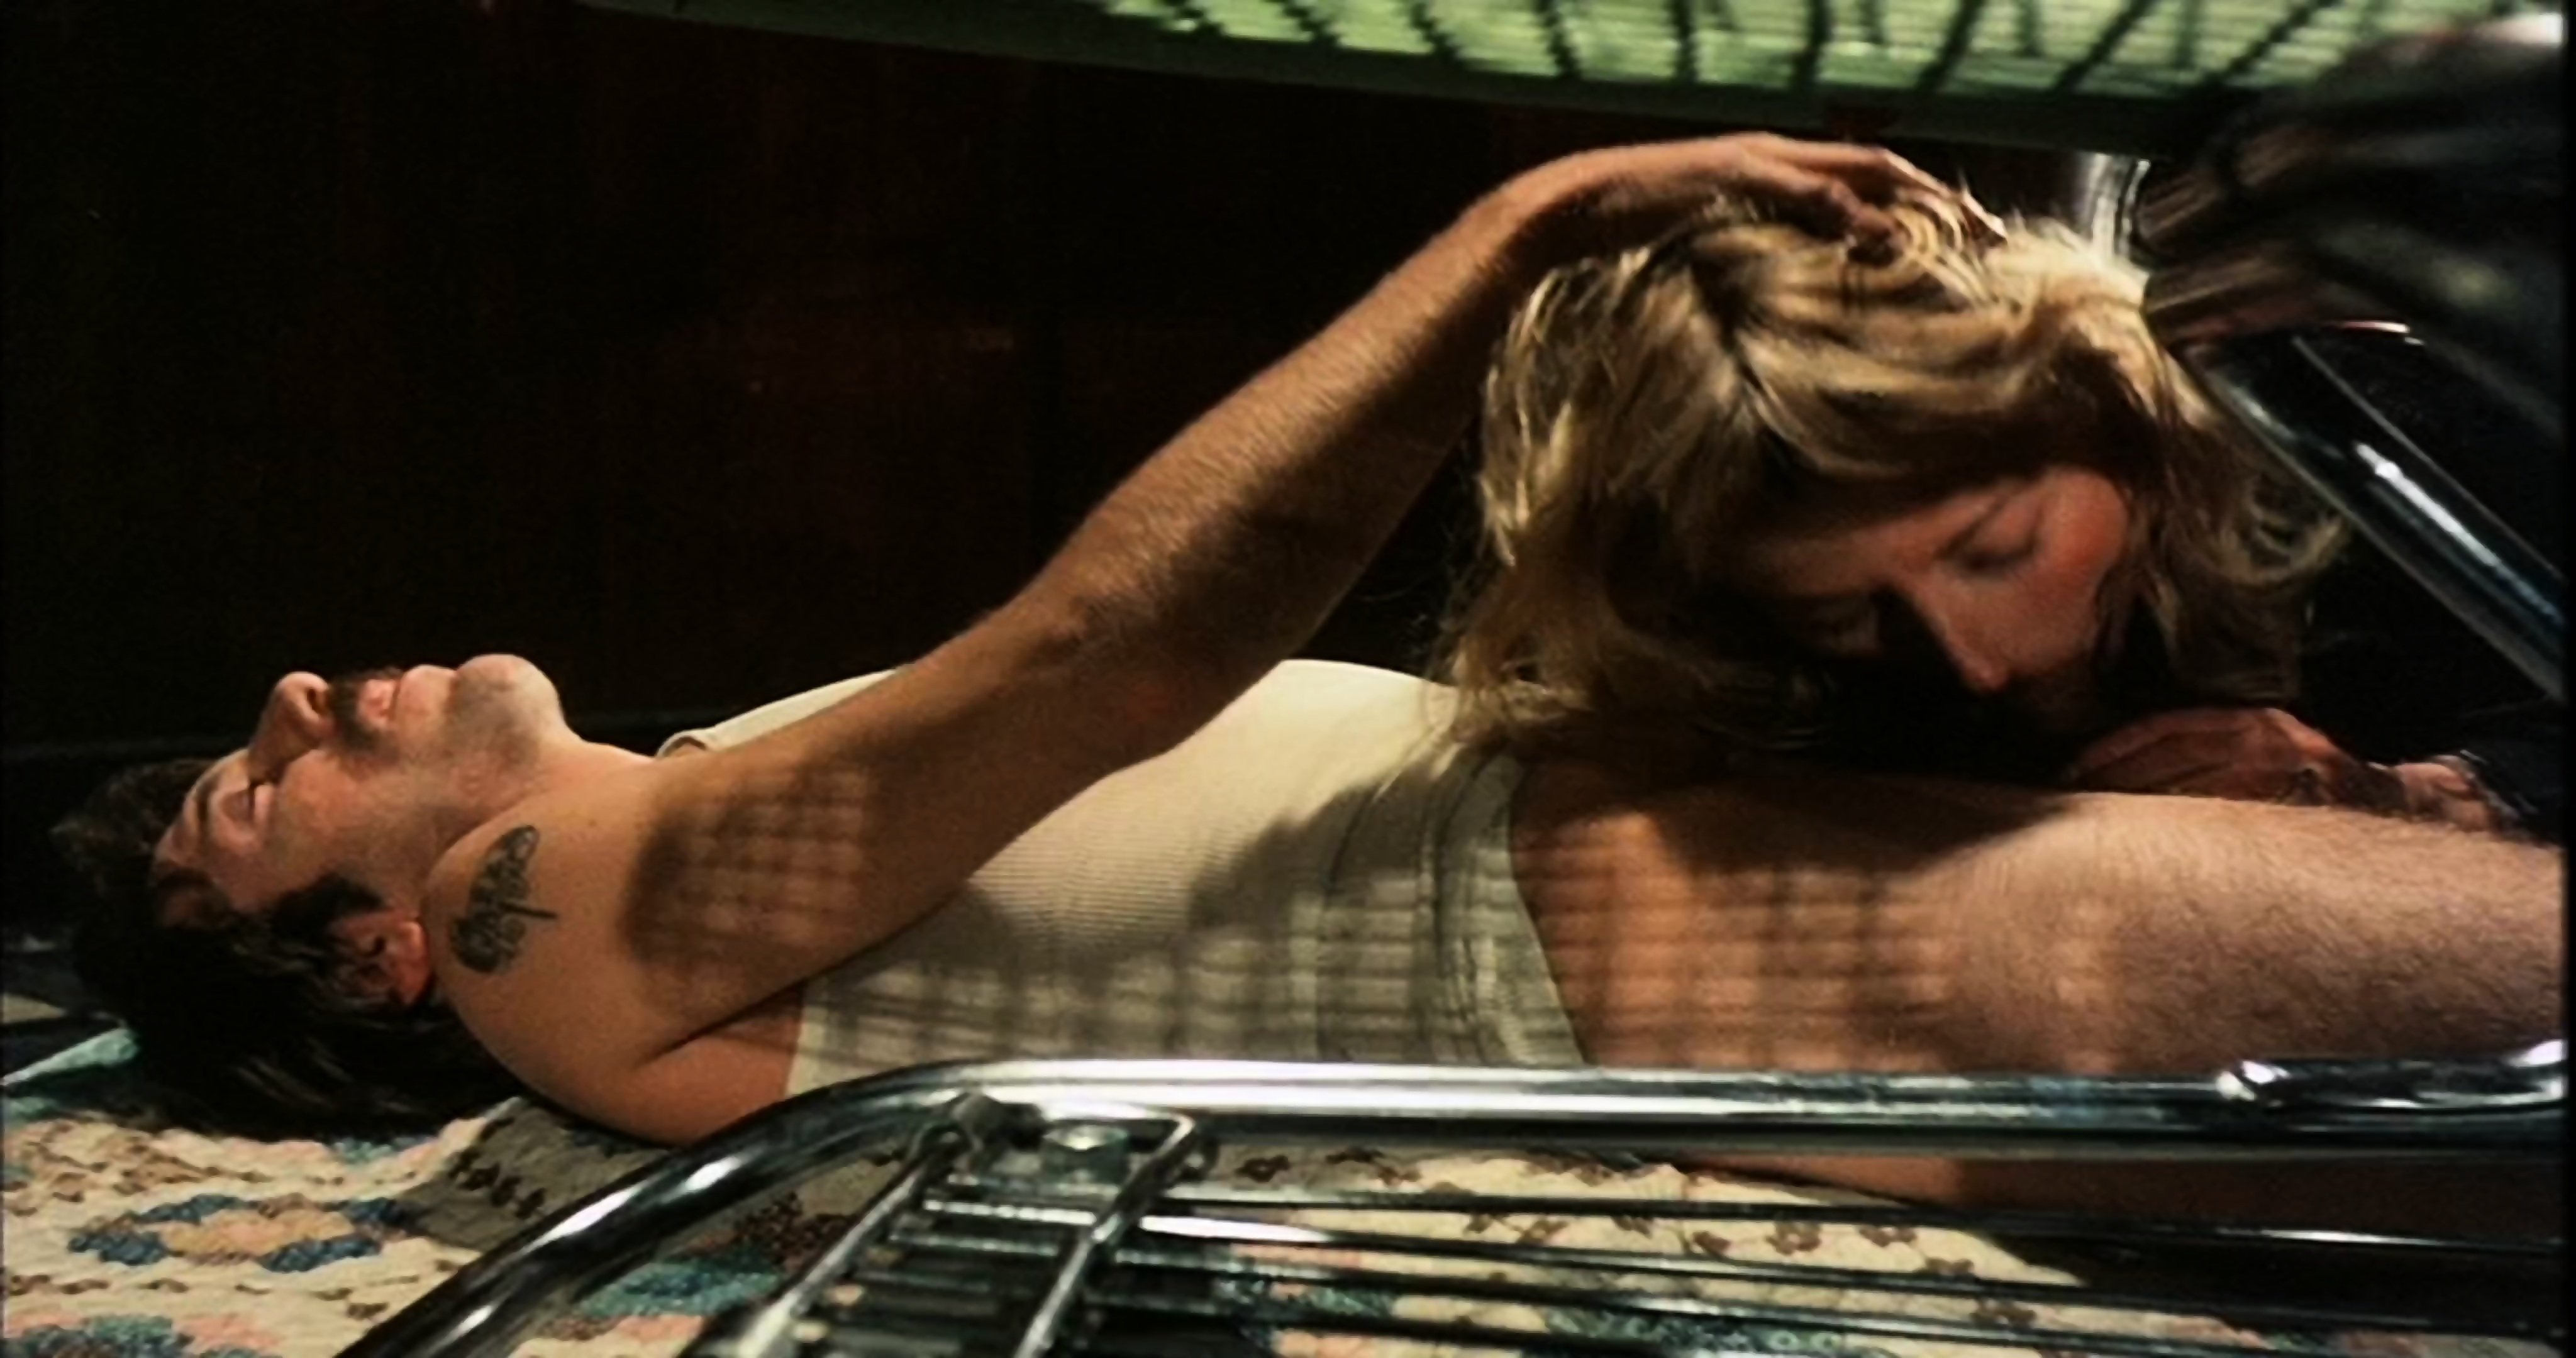 When Porn Was Amazing 11 - Annette Haven image photo